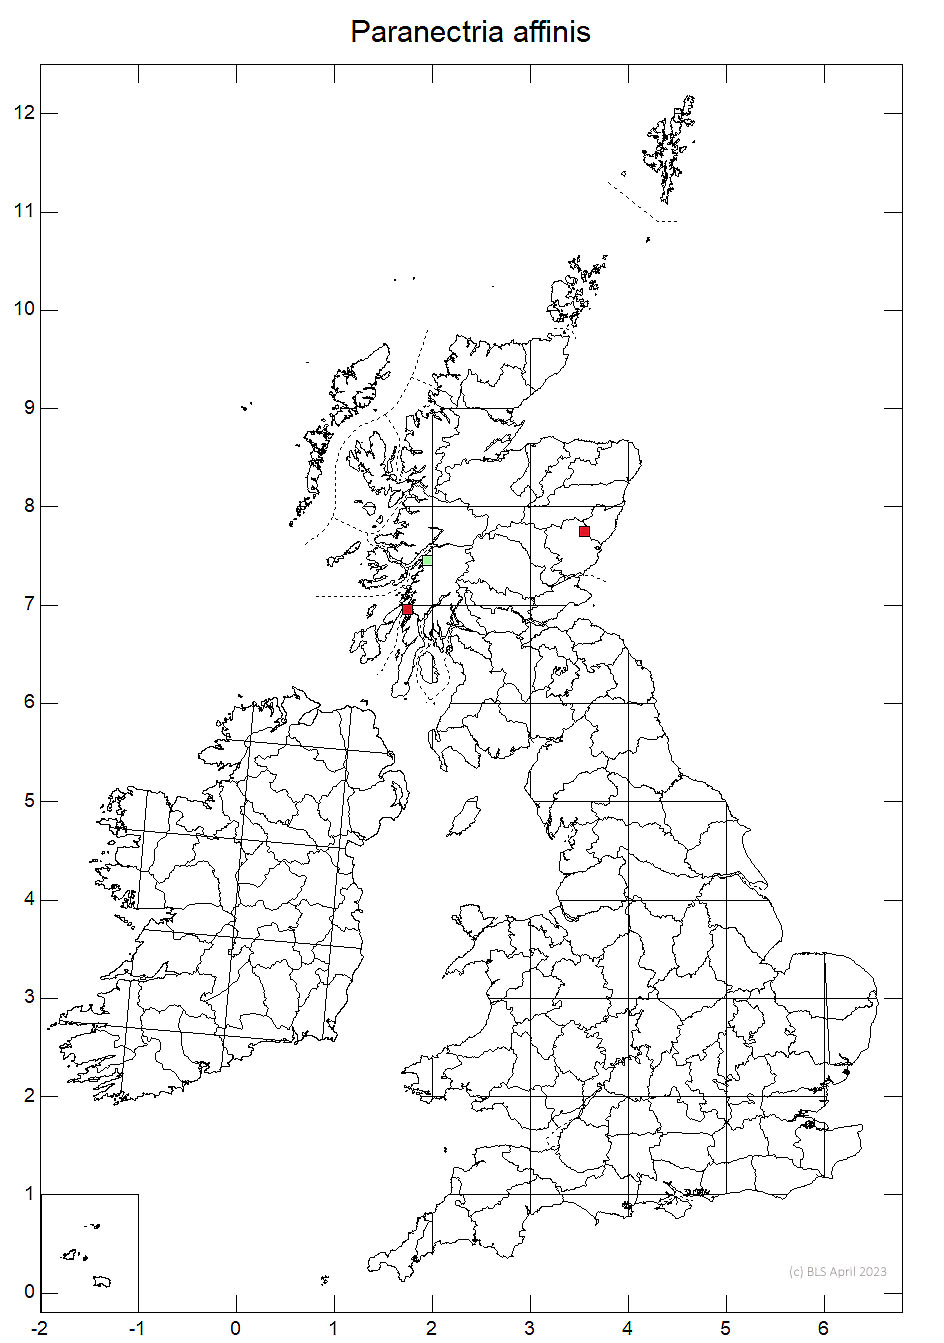 Paranectria affinis 10km sq distribution map